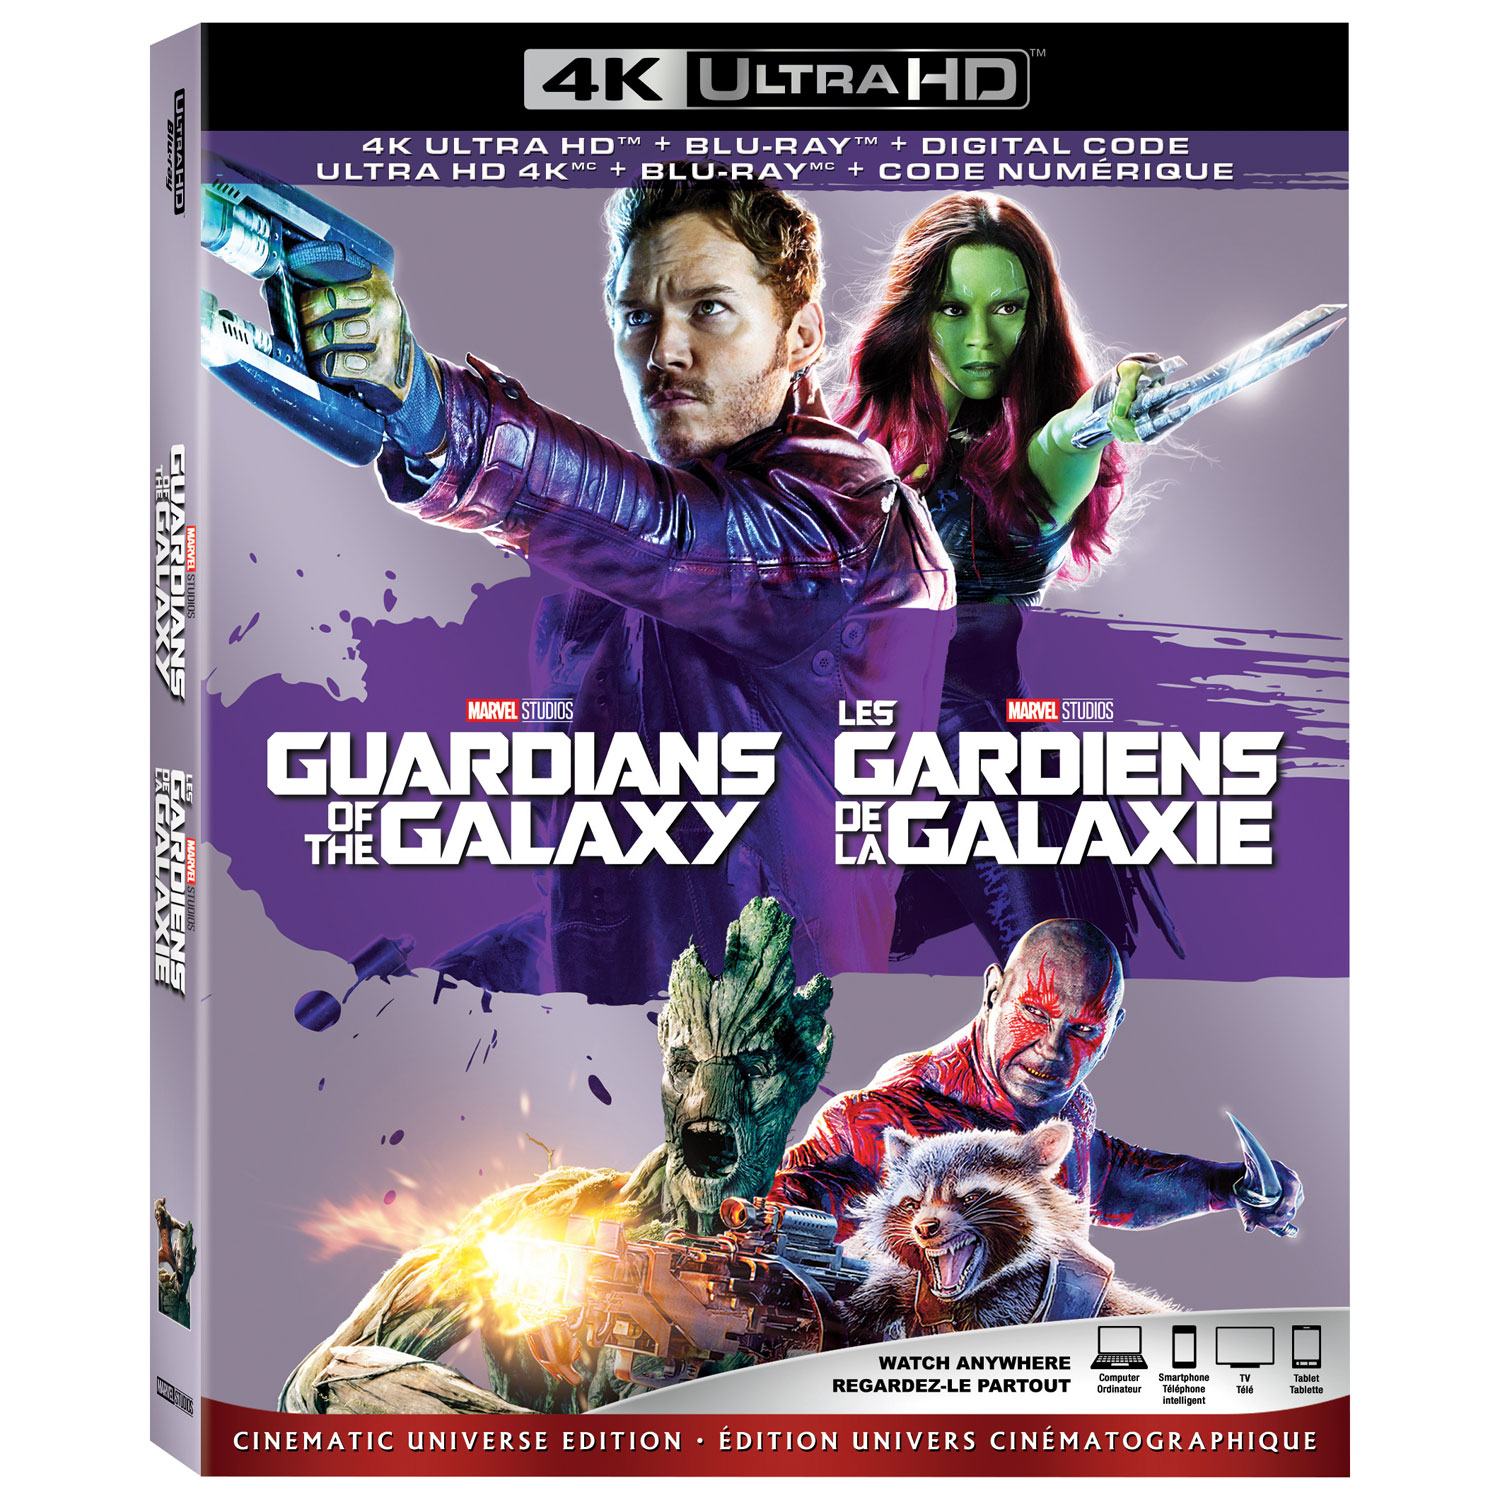 the guardians english dub dvd